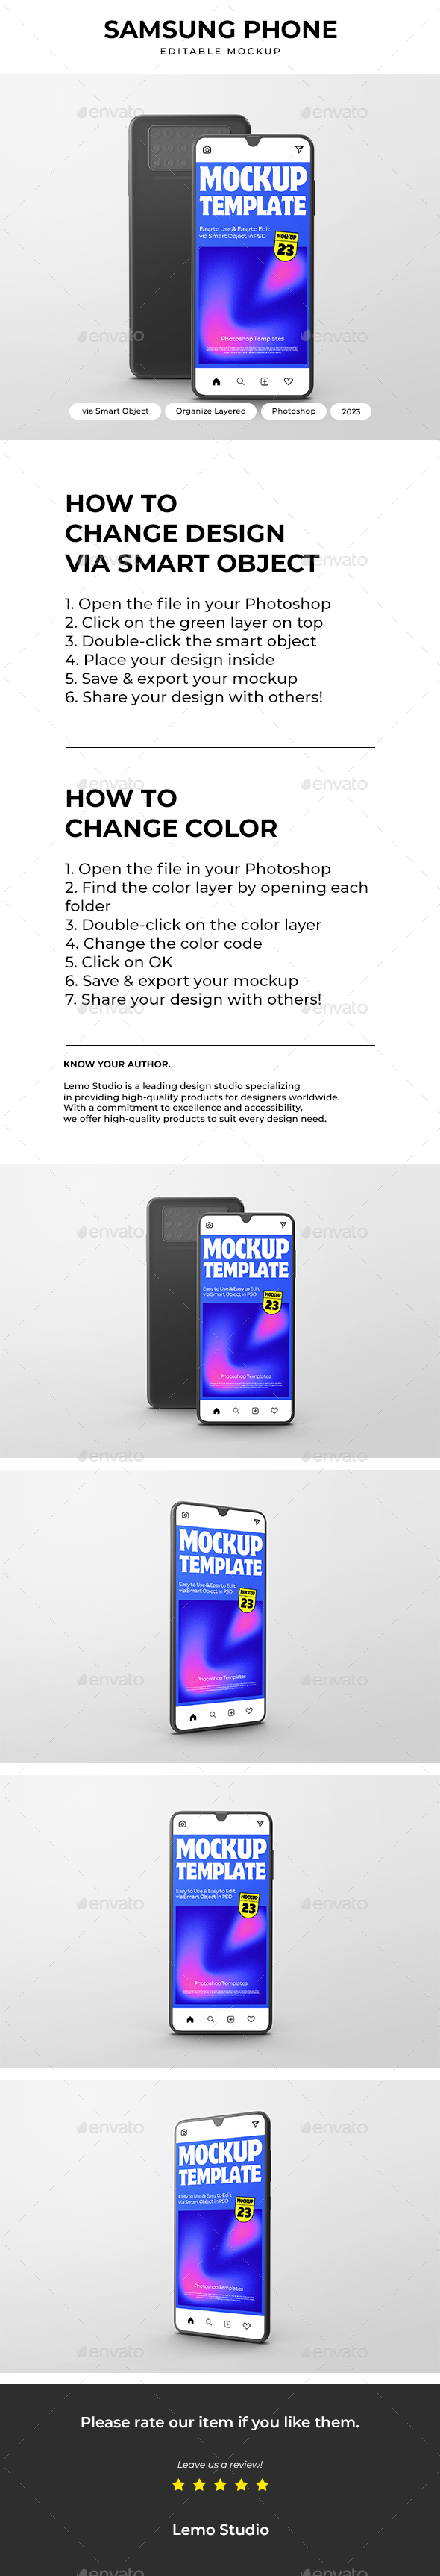 [DOWNLOAD]Samsung Phone Mockup